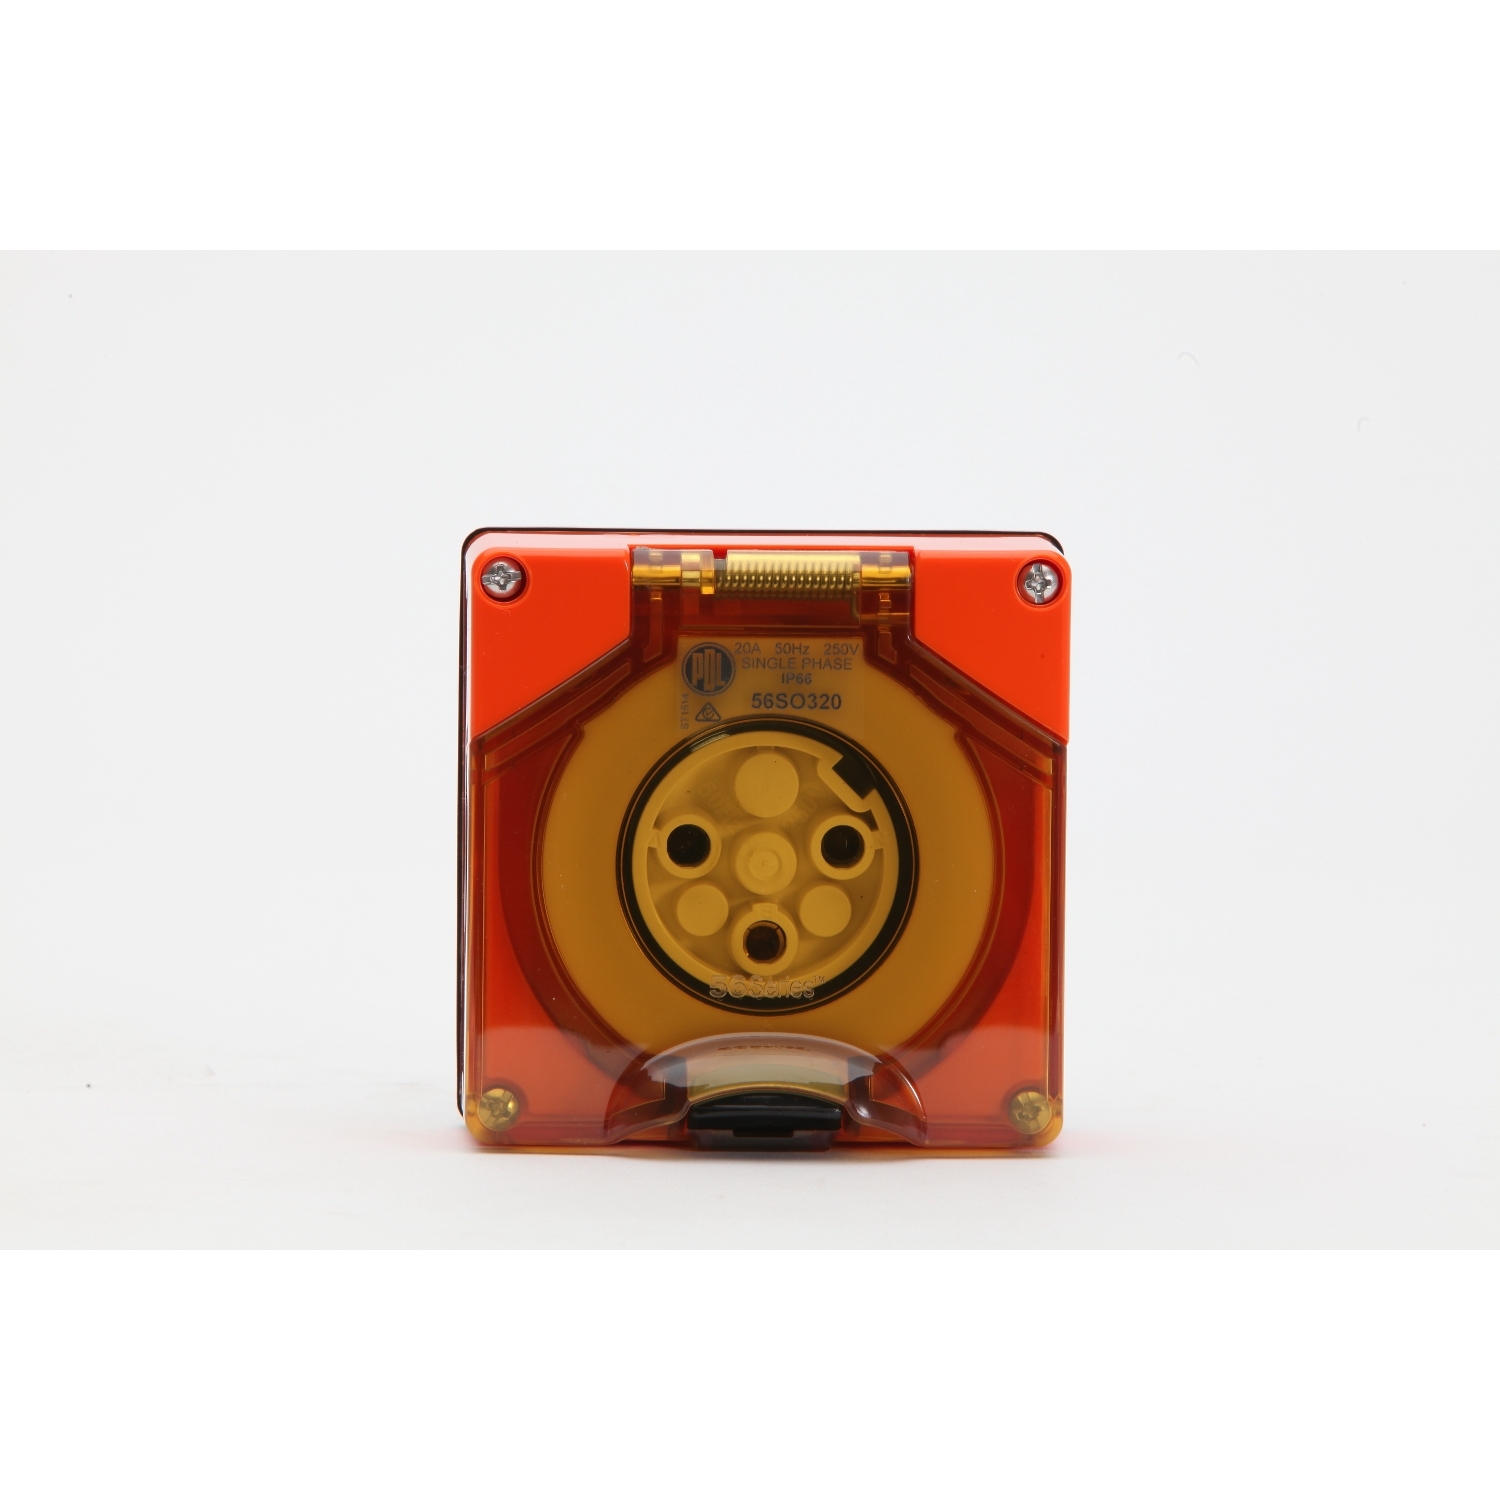 PDL 56 Series - Socket 20A 250V 1-Phase 3-Round Pin IP66 - Chemical-Resistant Orange